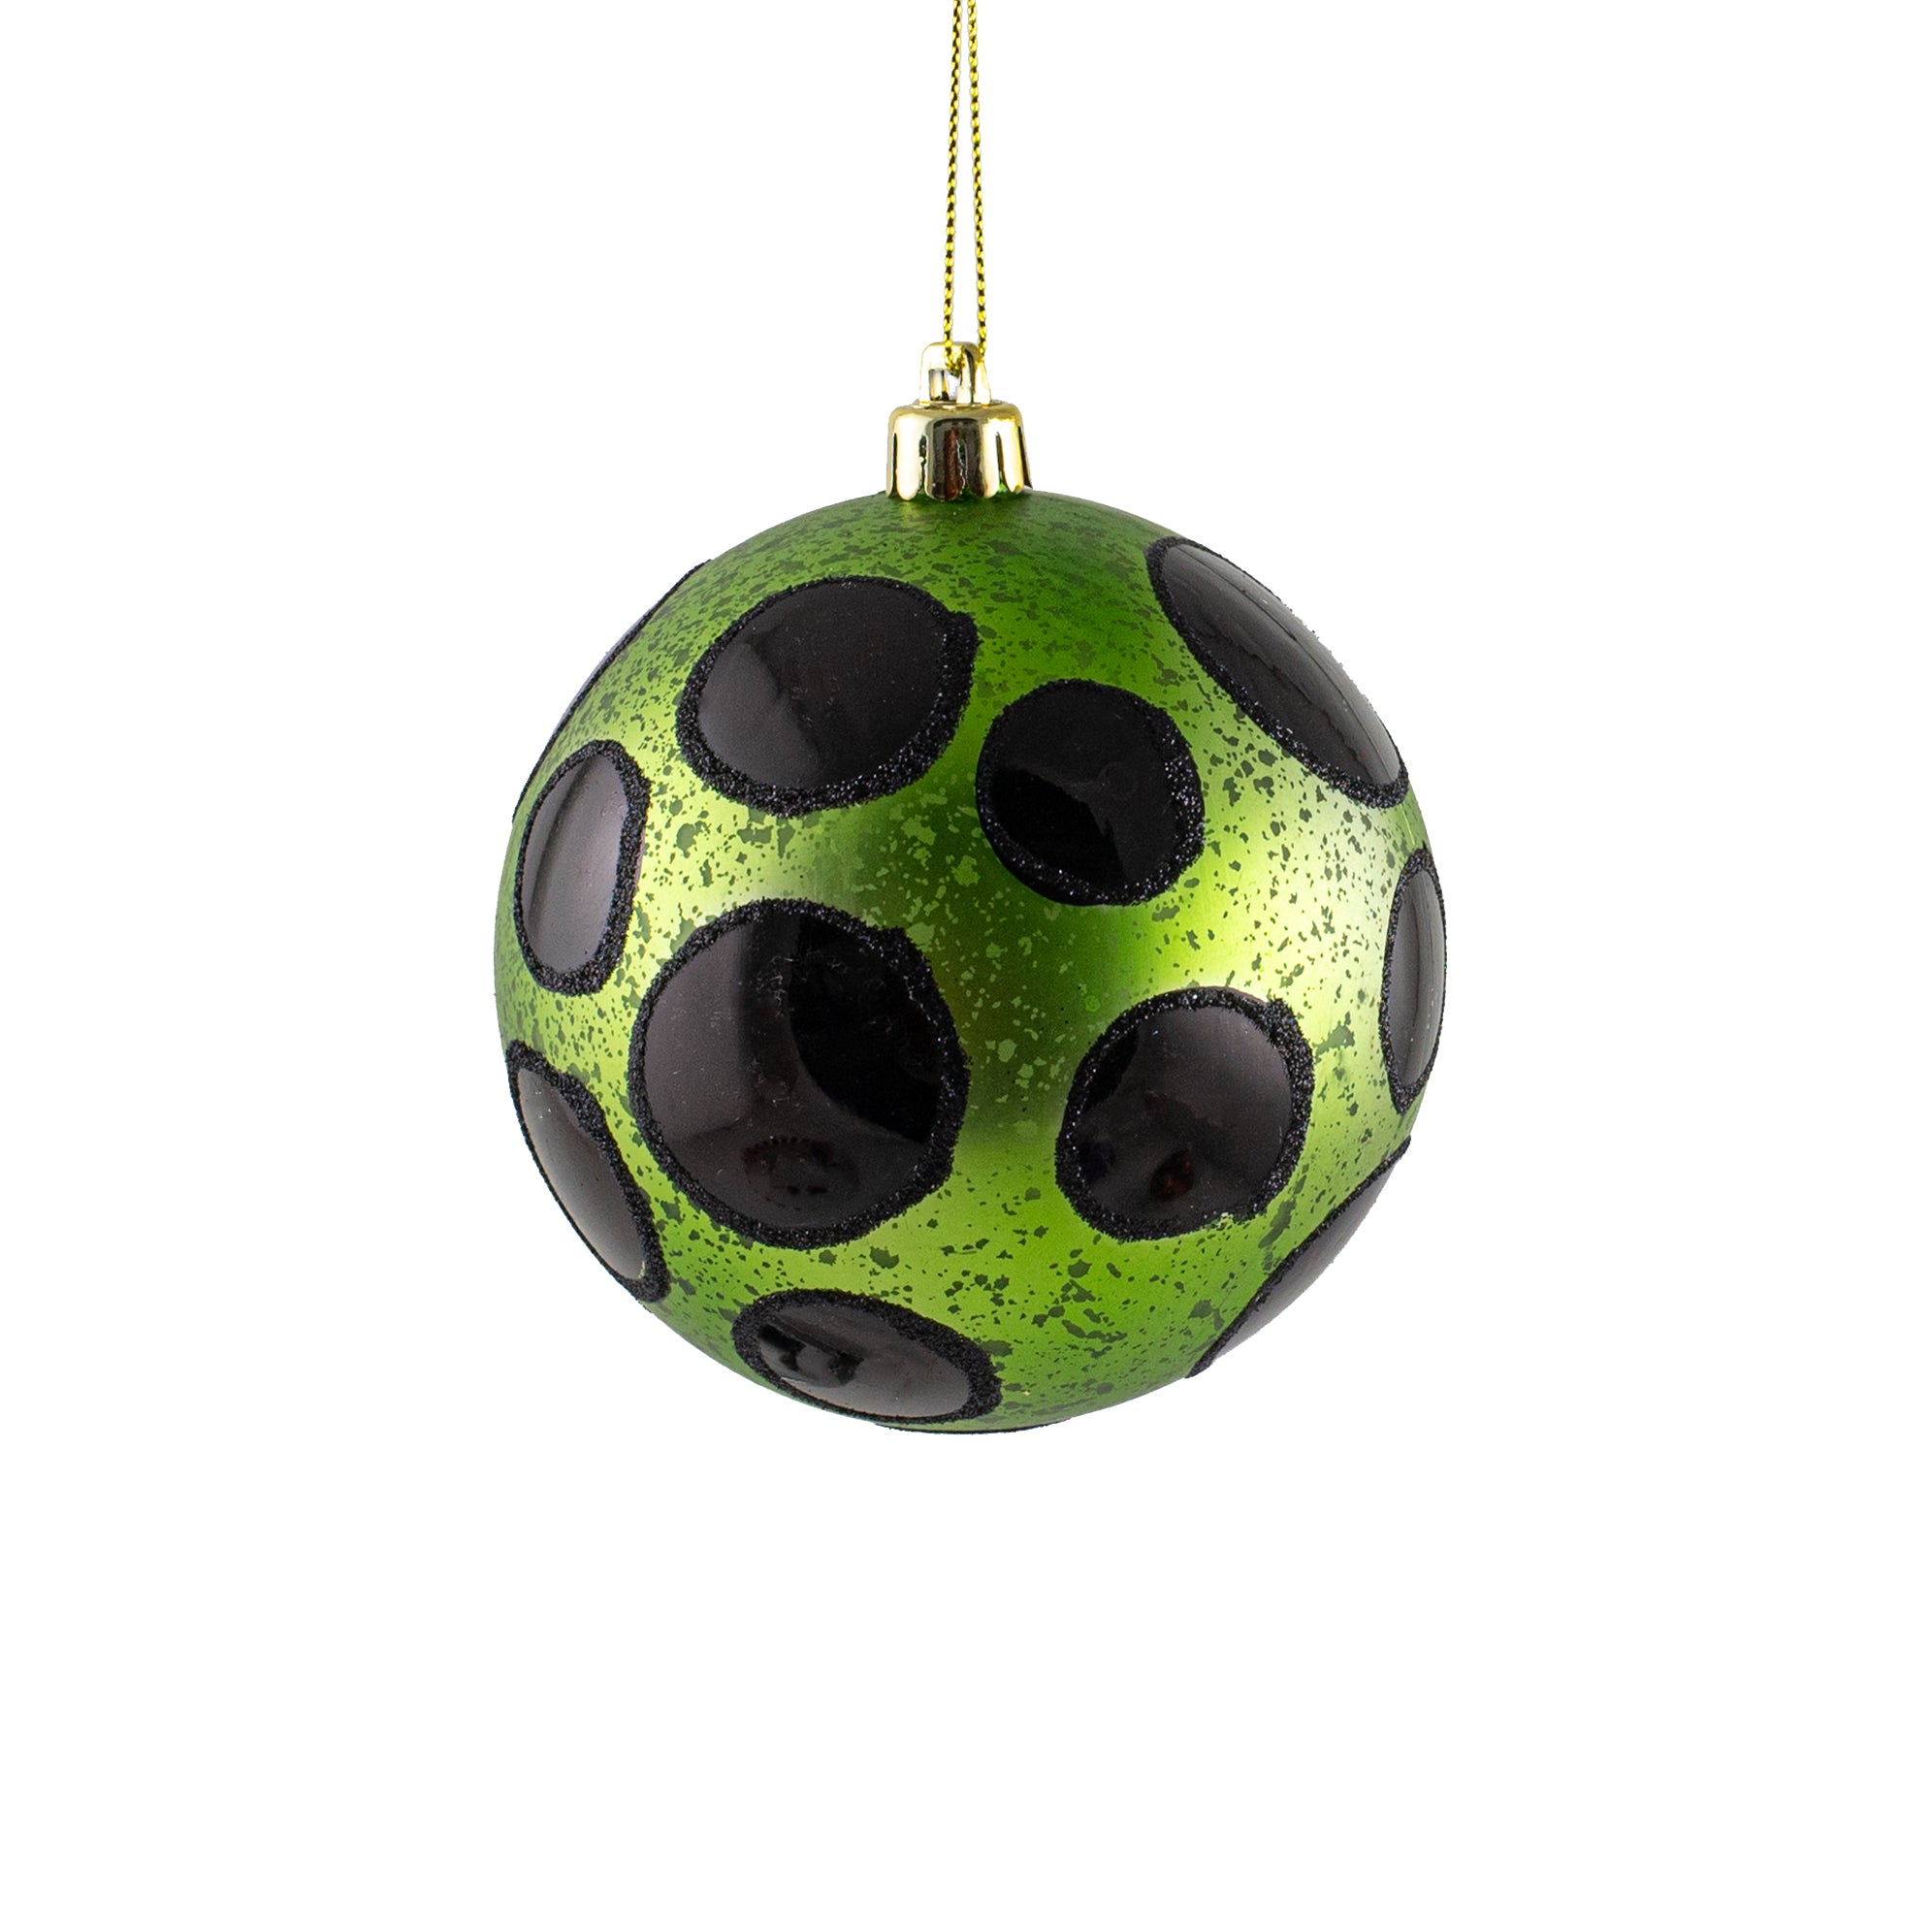 100mm Antiqued Dots Ornament: Lime Green & Black